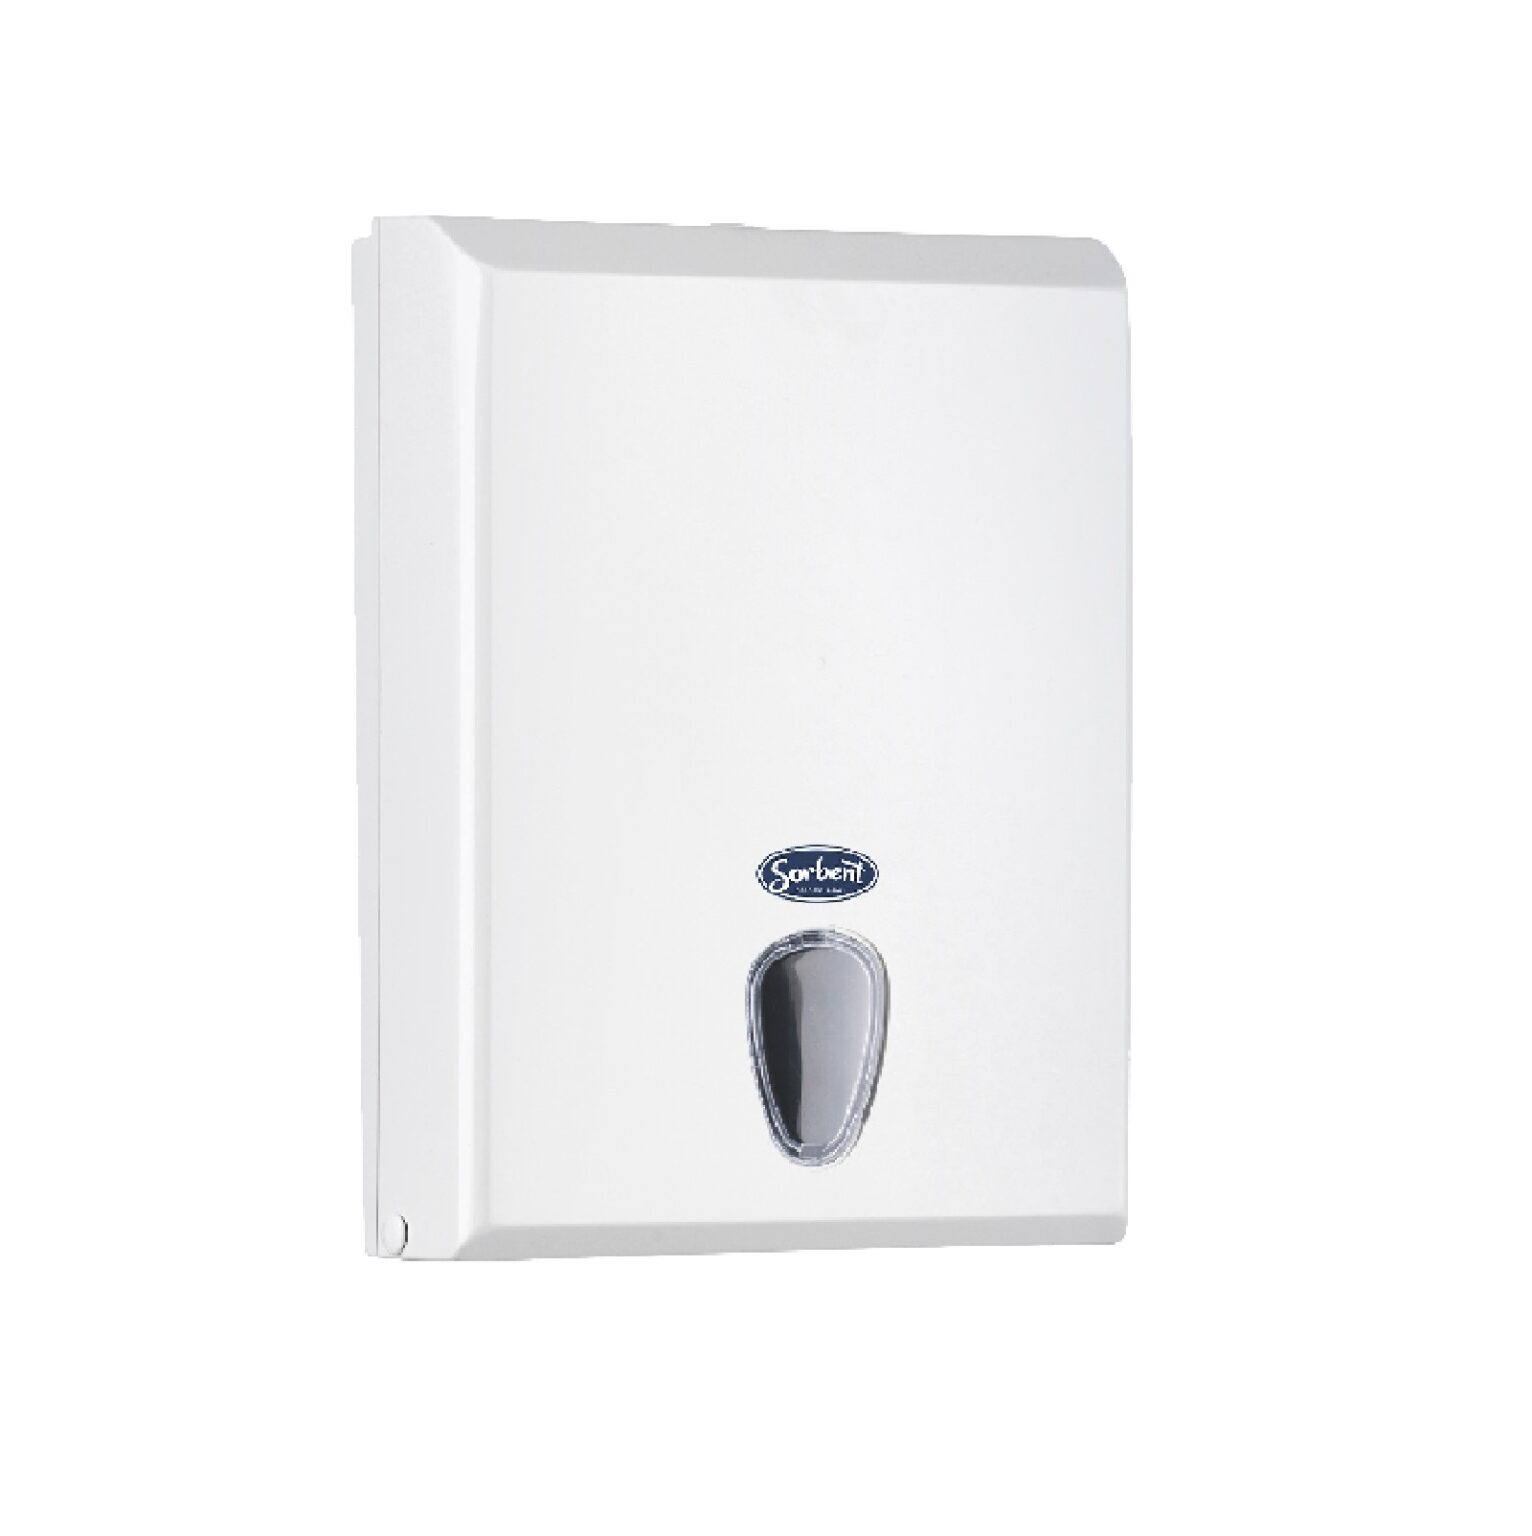 25507_SP Compact Hand Towel Dispenser_Image